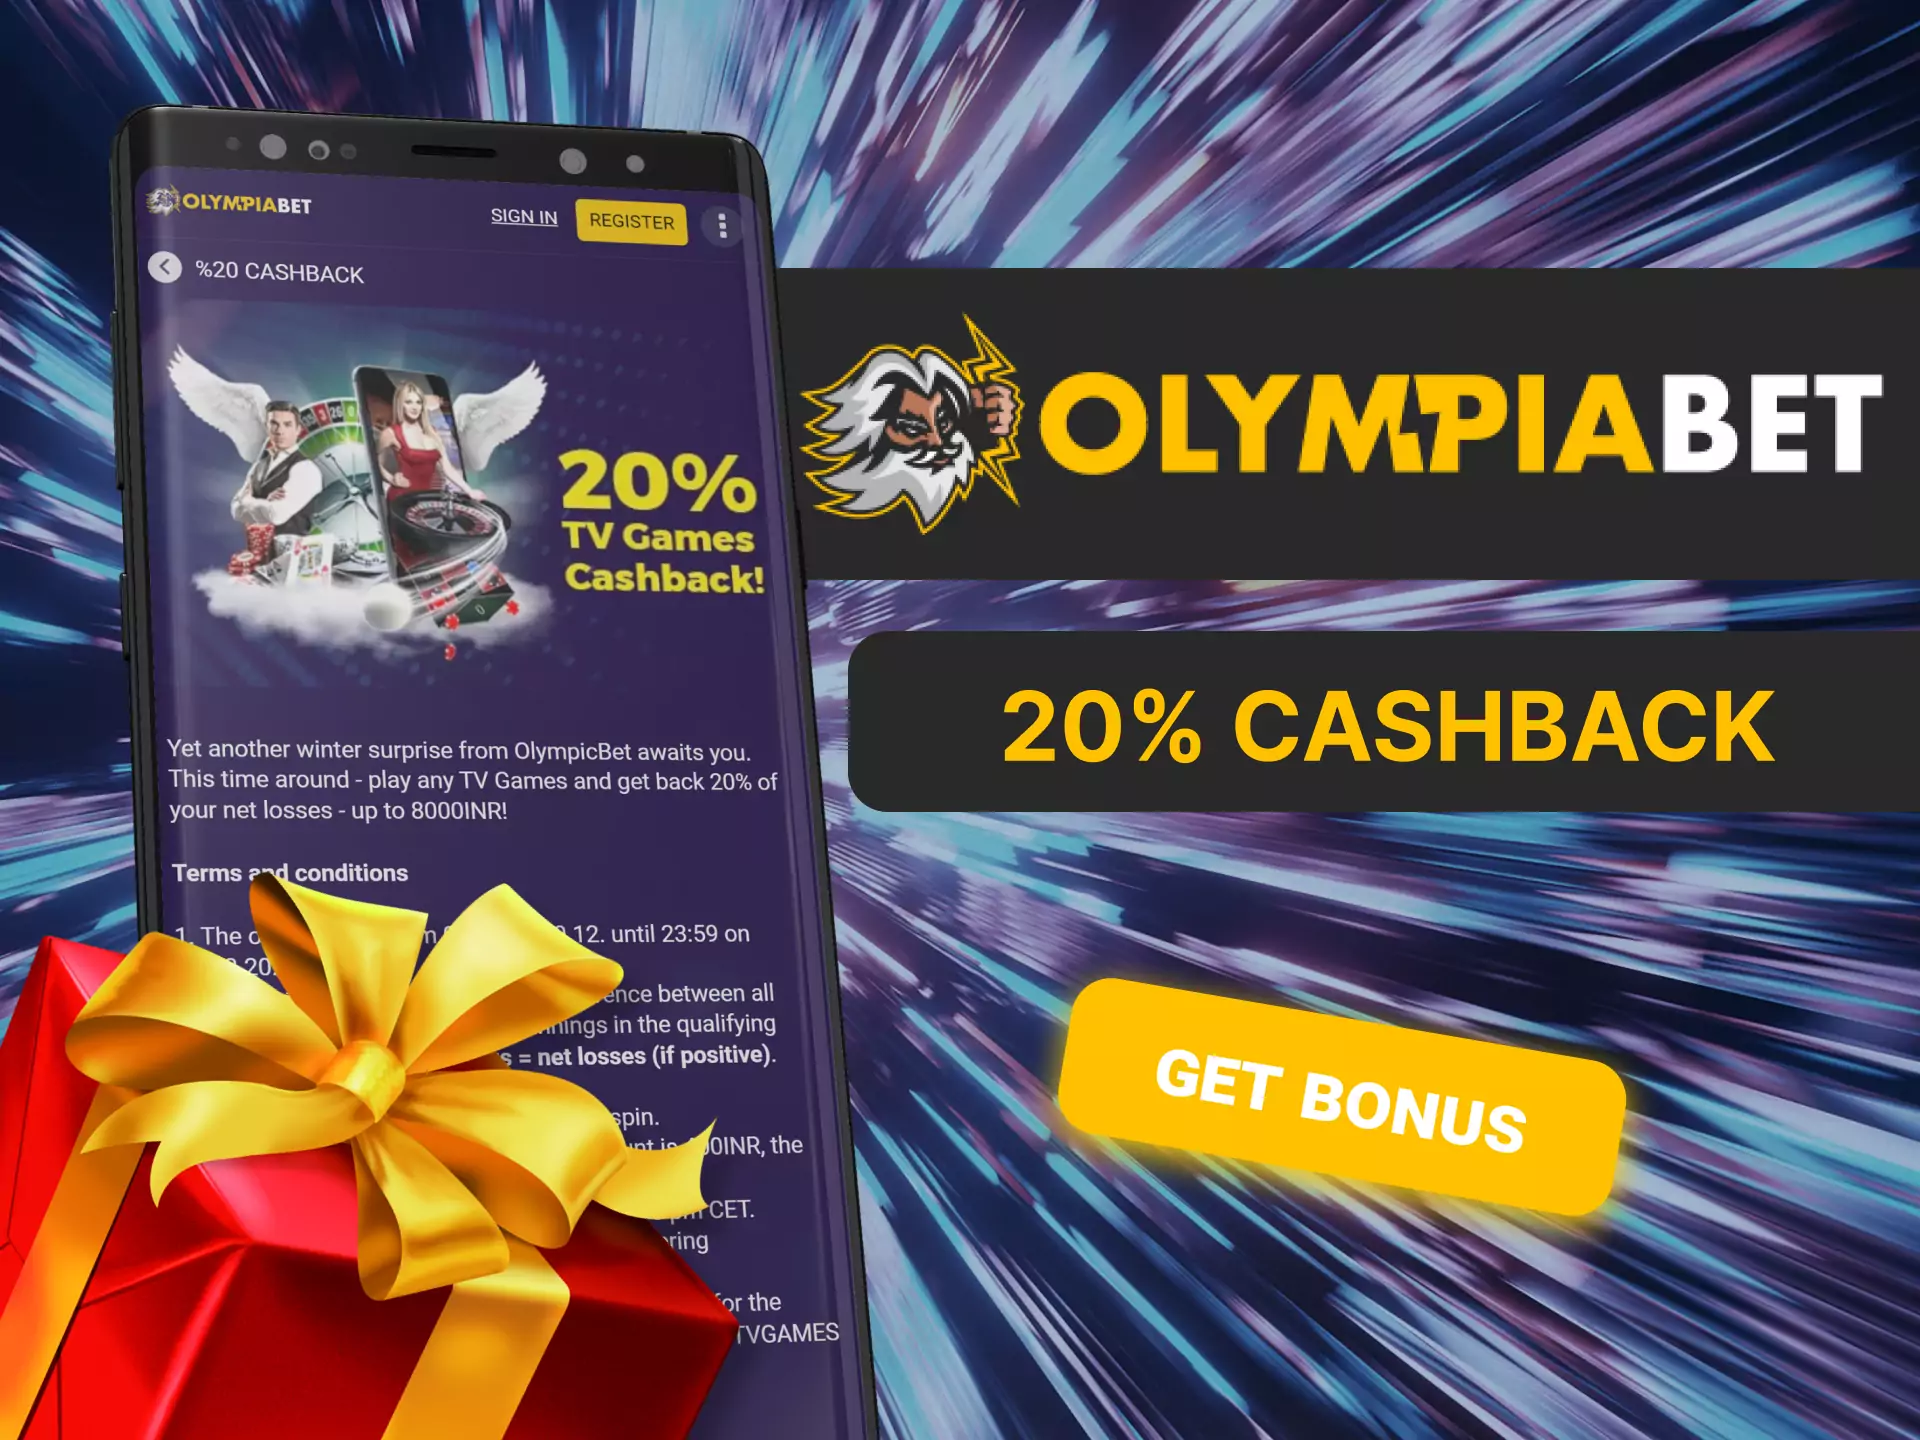 Get a special cashback bonus from Olympiabet.